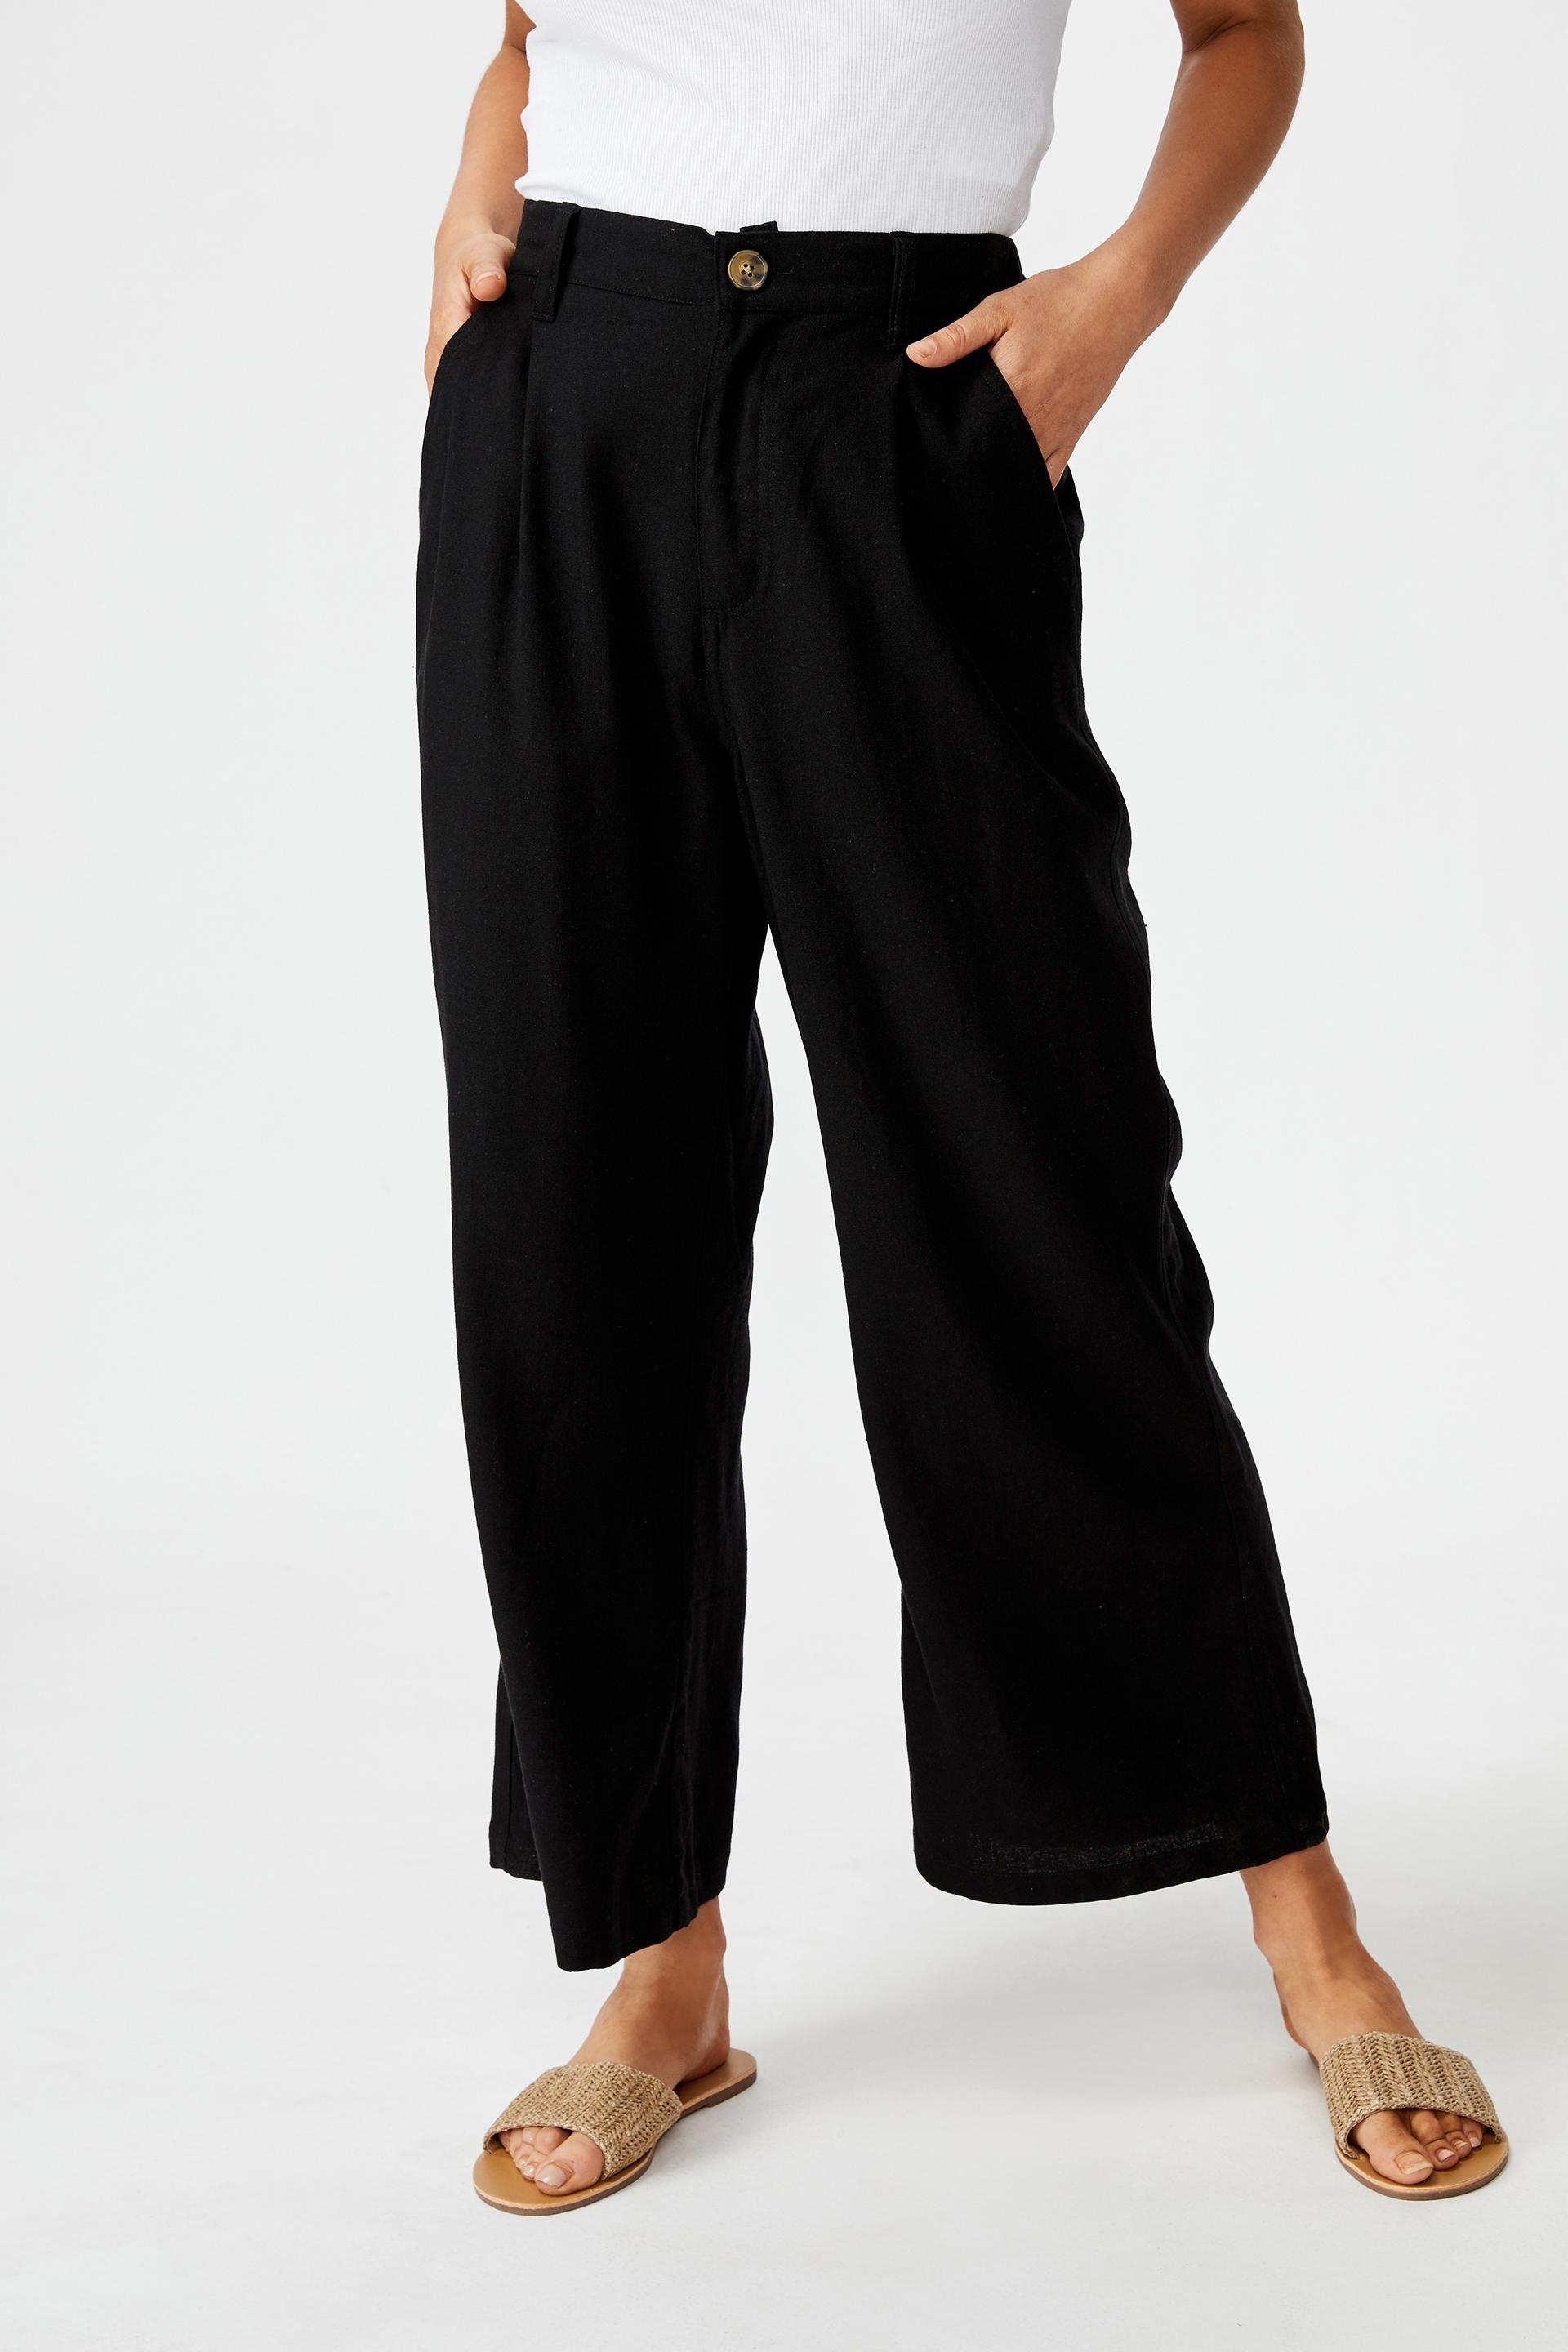 Cindy wide leg pant - black Cotton On Trousers | Superbalist.com